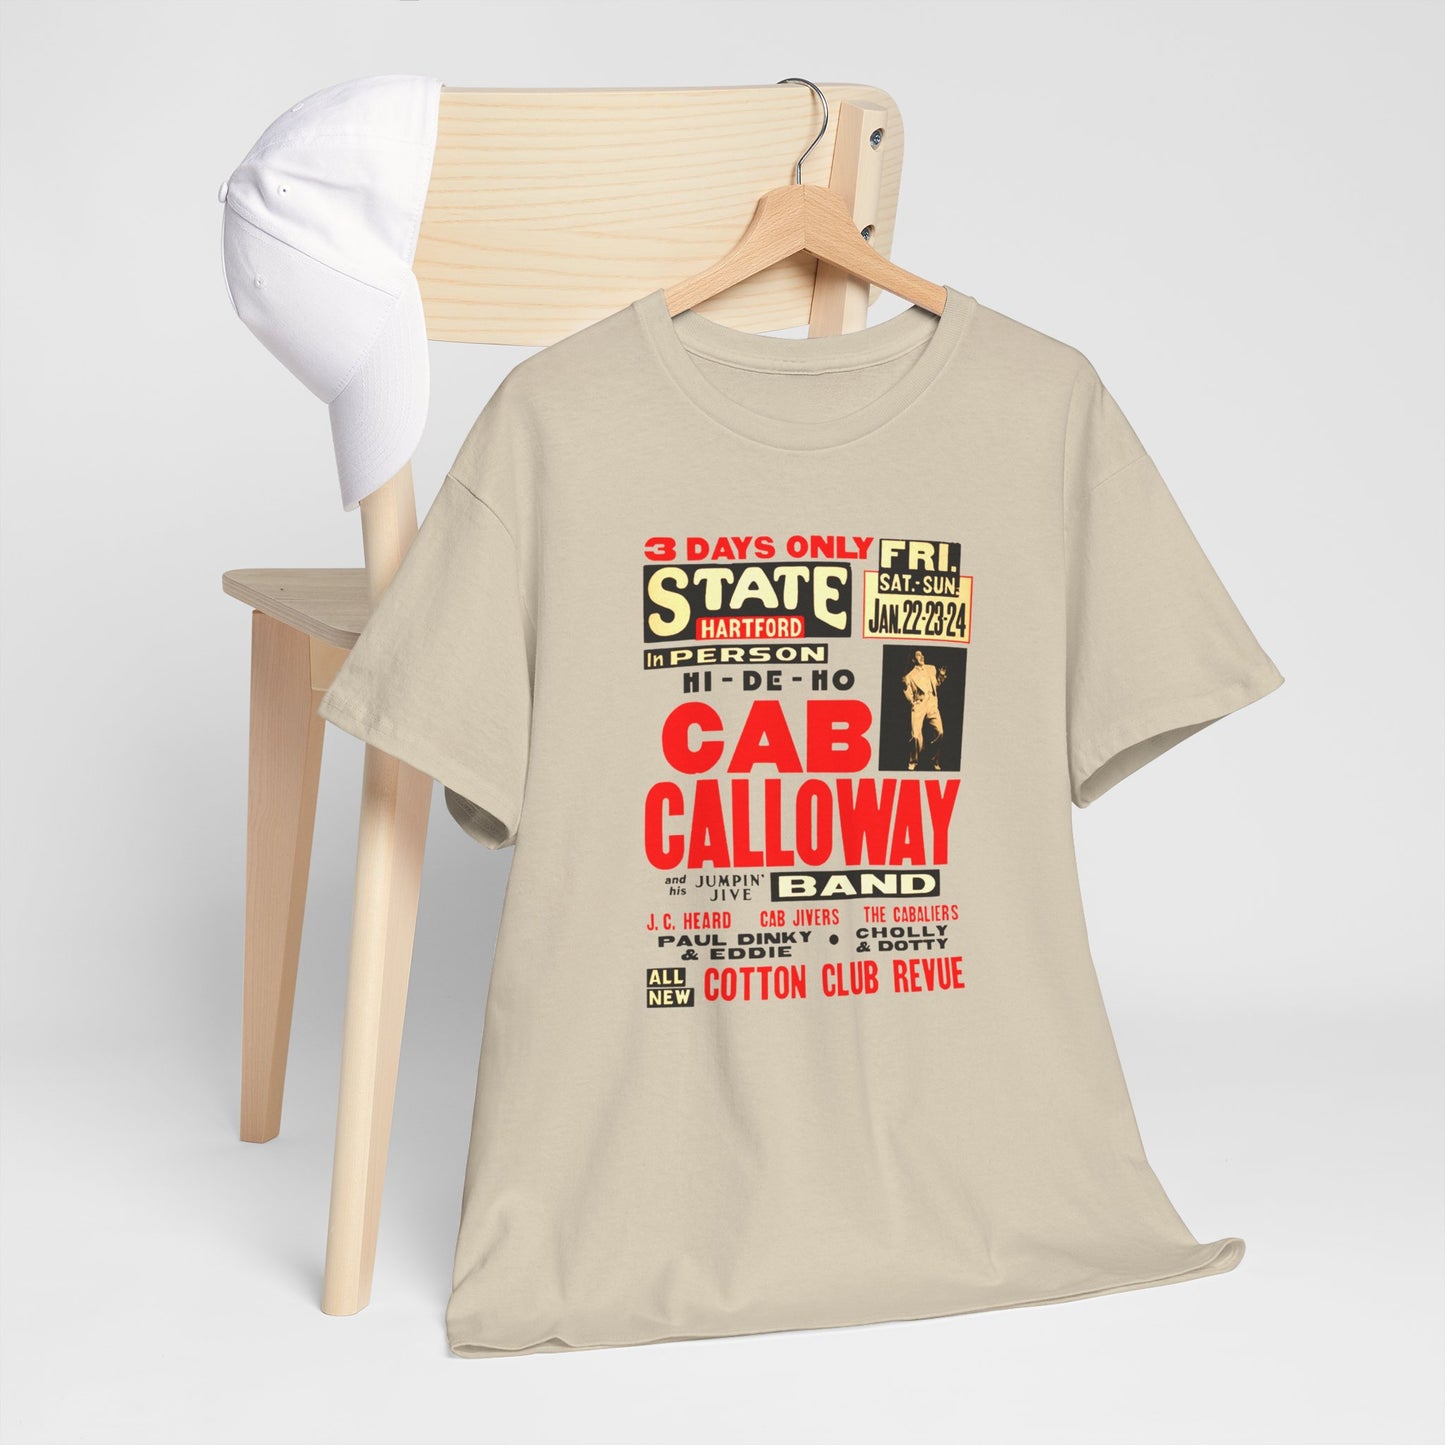 Concert Poster Tee #187: Cab Calloway